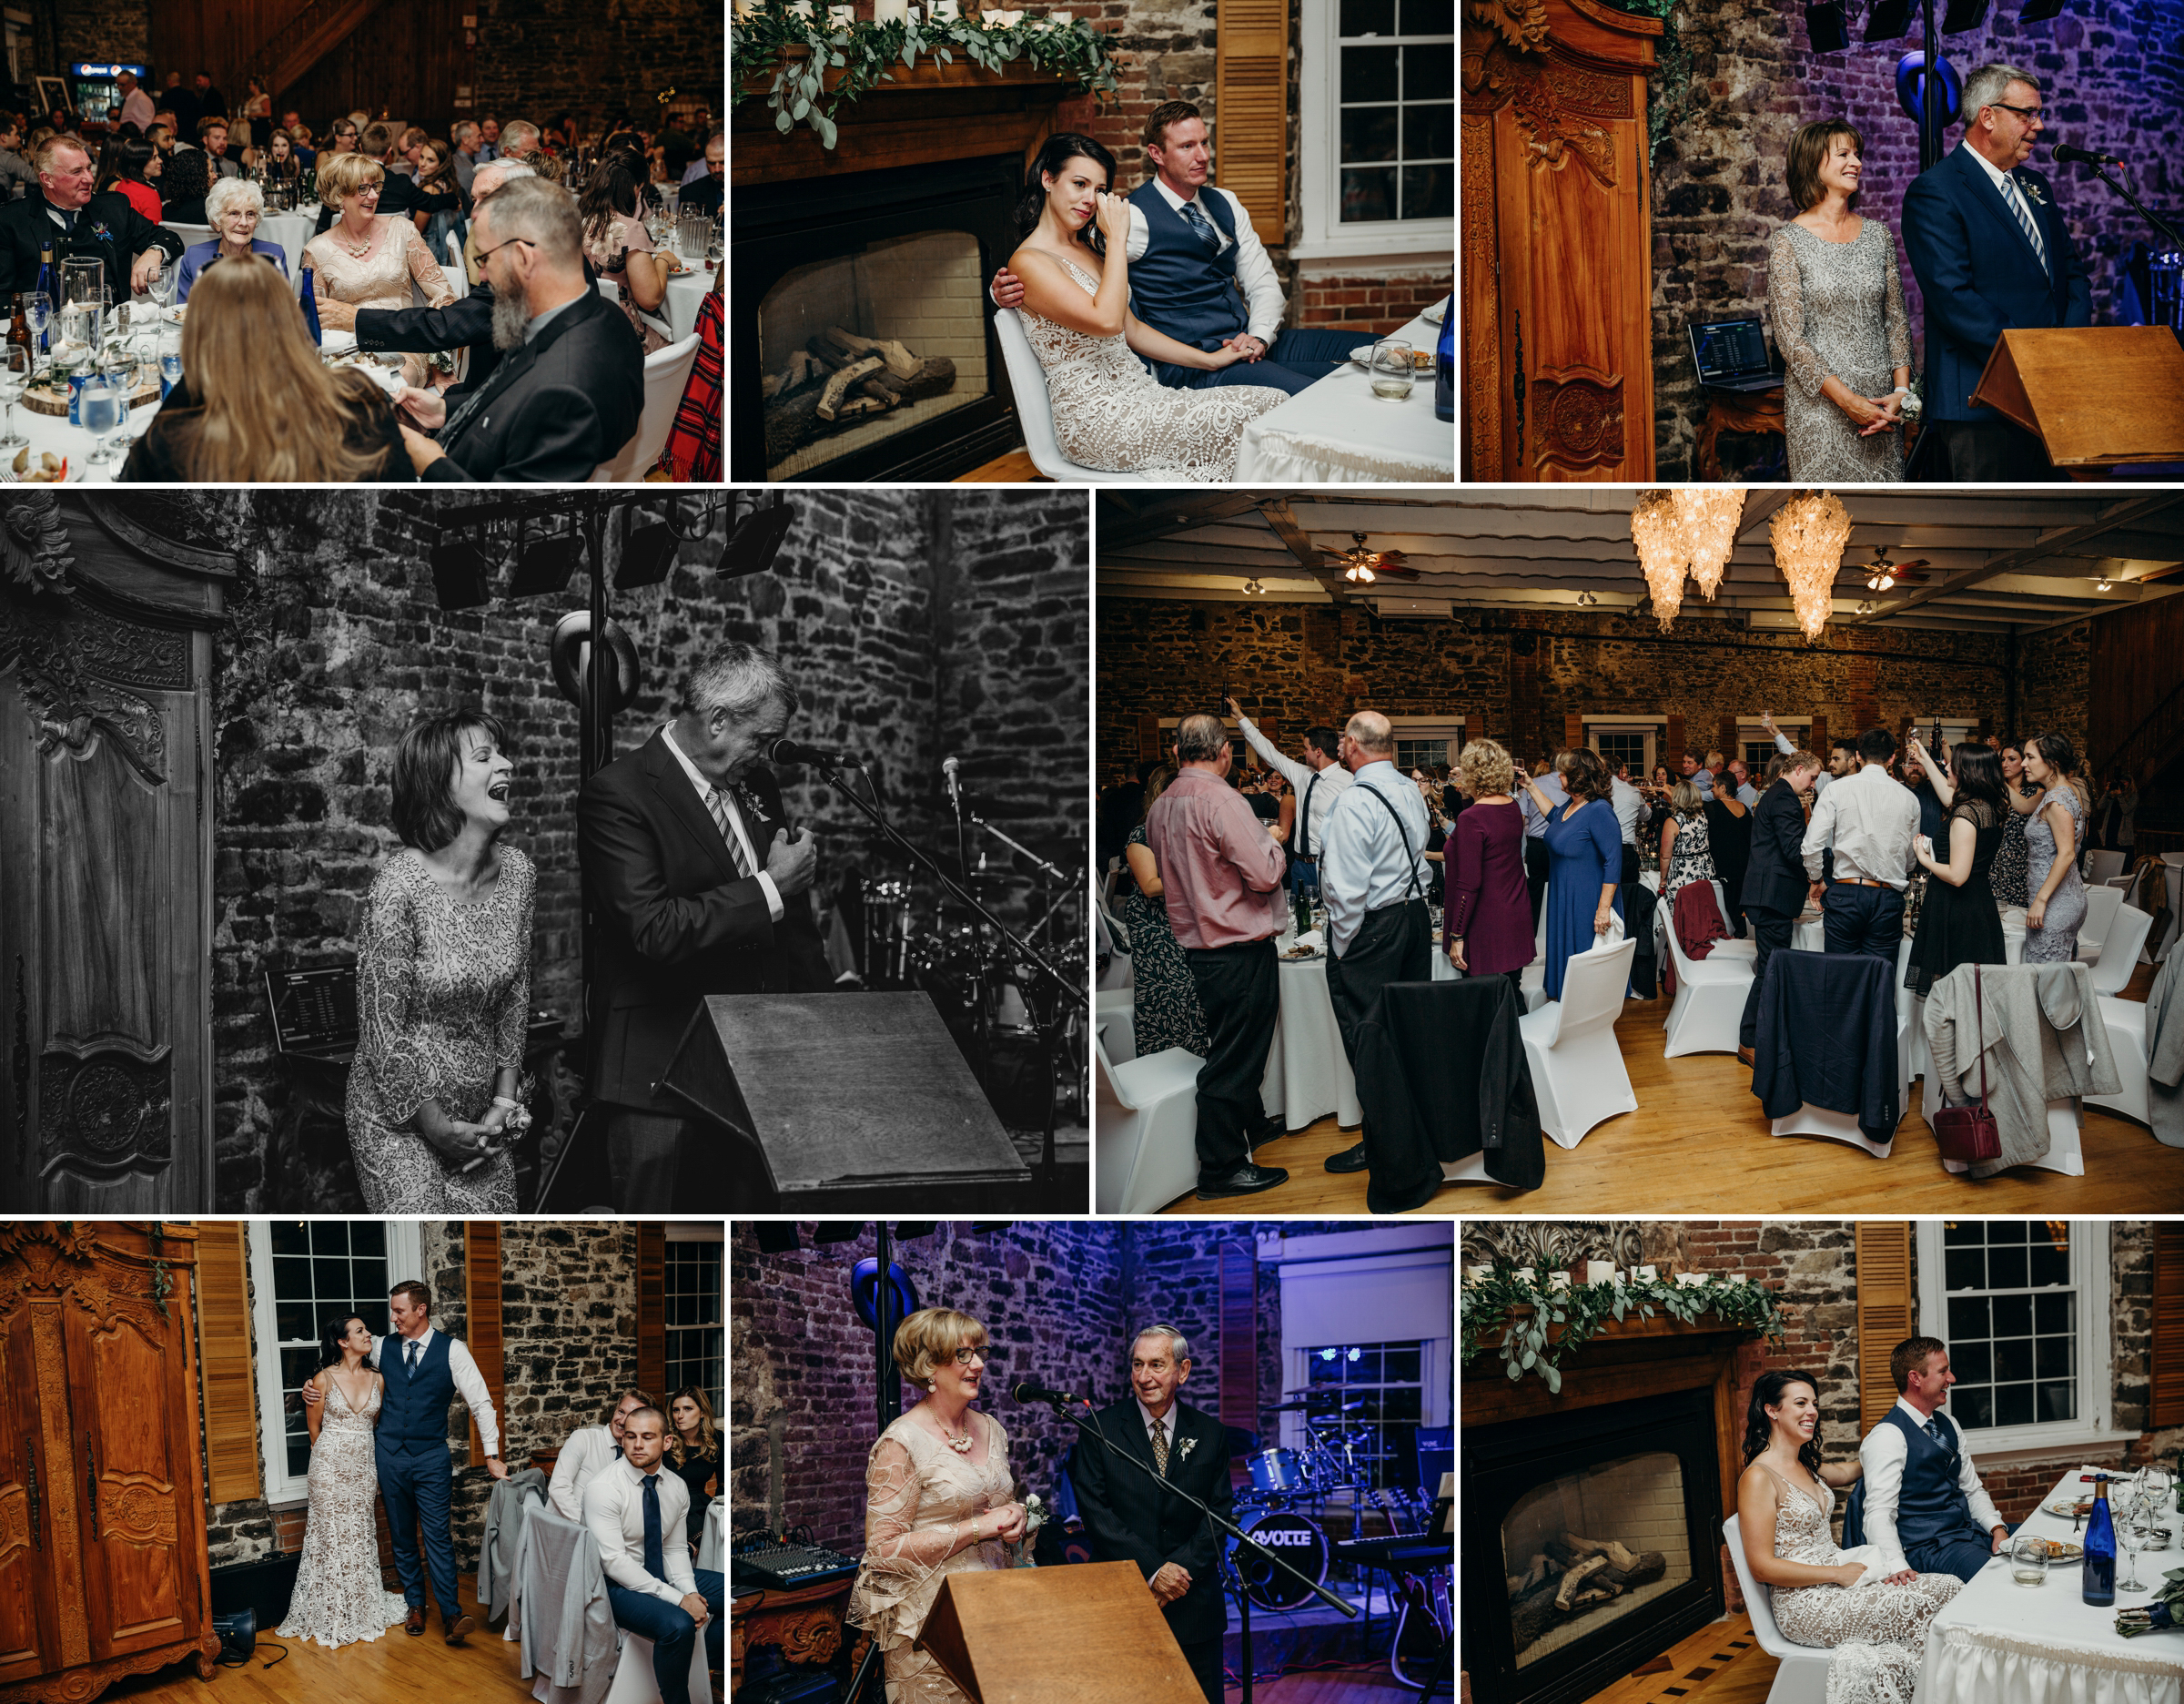 Baldachin Inn Merrickville Wedding 2 - Taylore and Callum 33.jpg